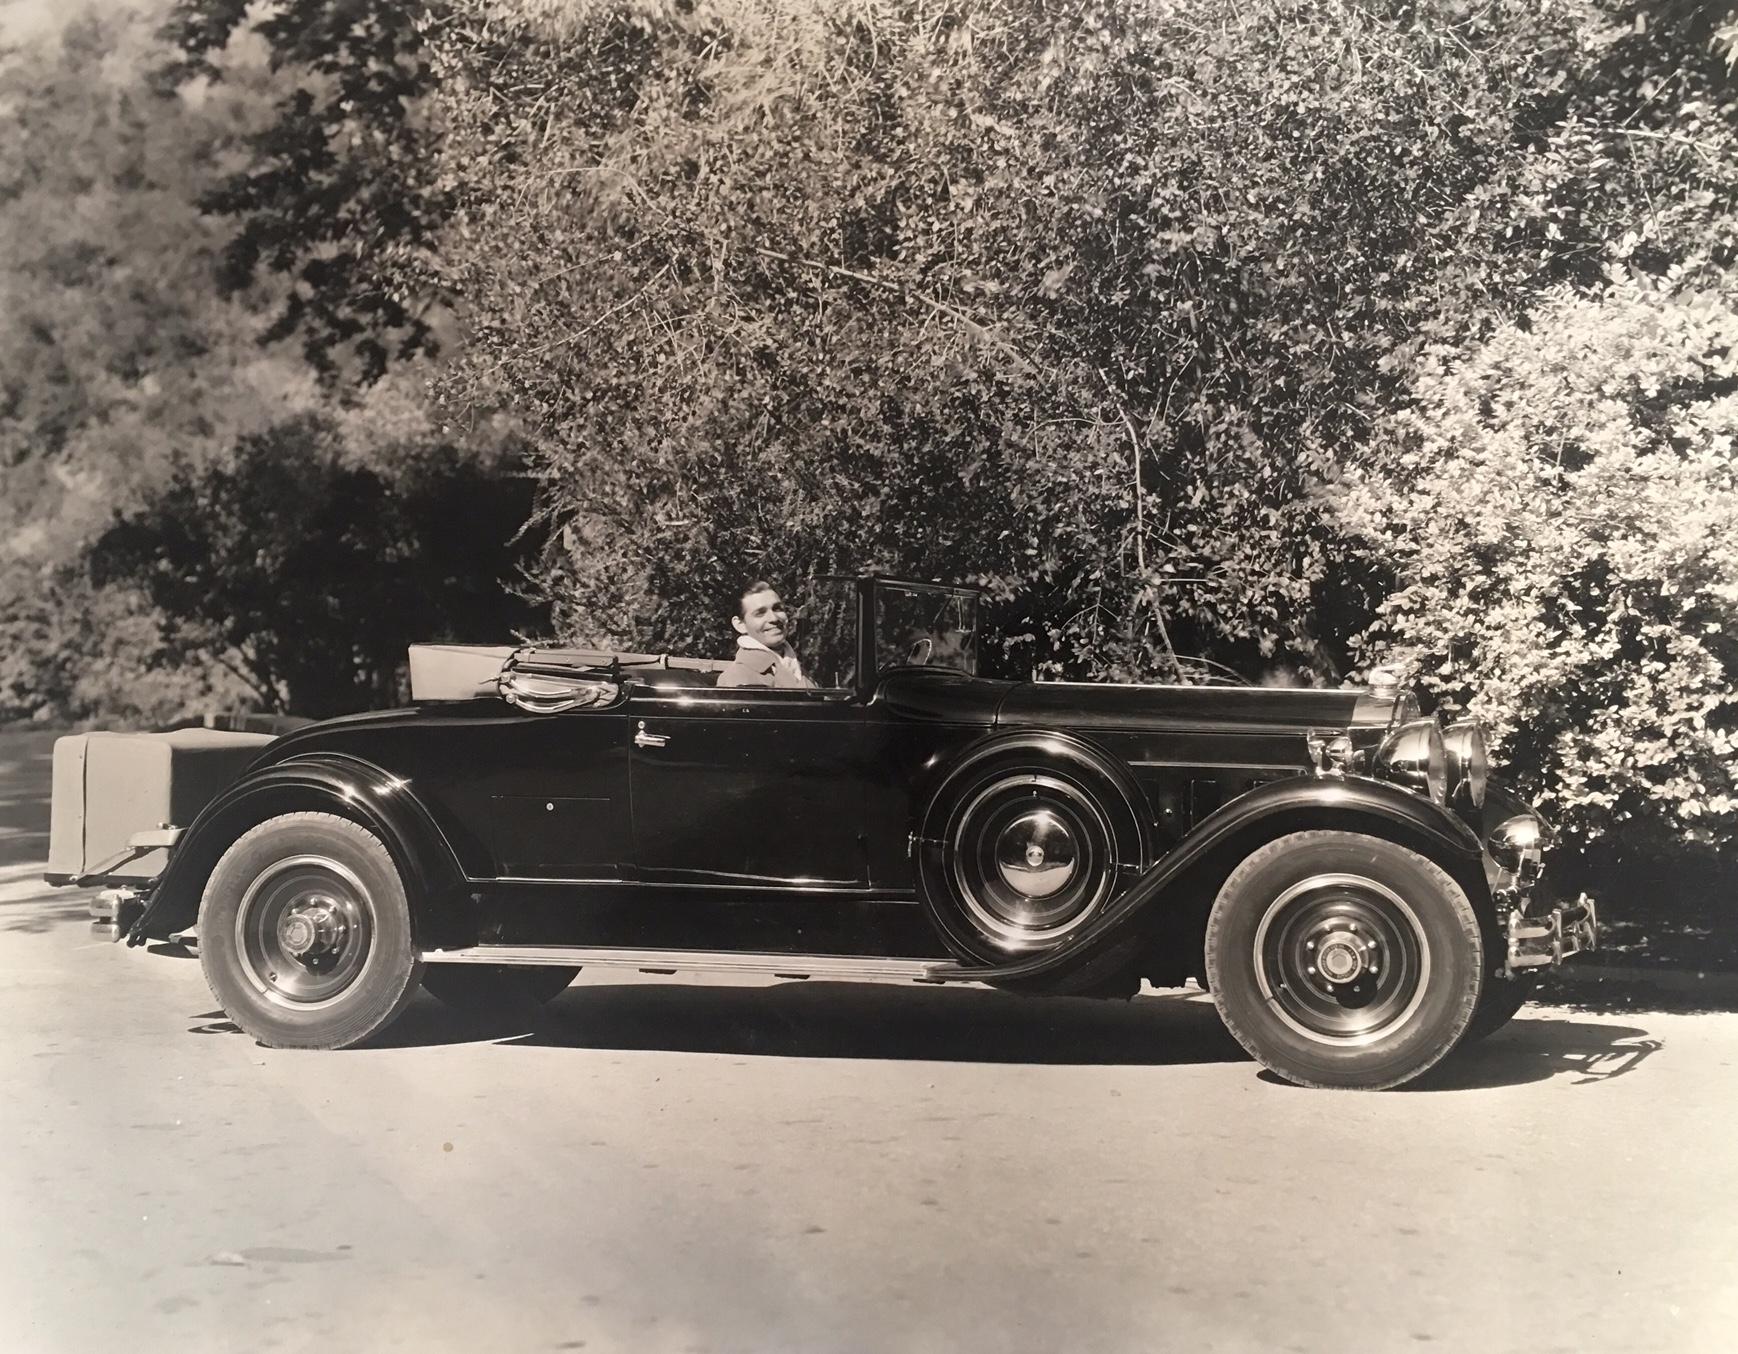 Clarence Sinclair Bull, "Gable in Car, " vintage photograph